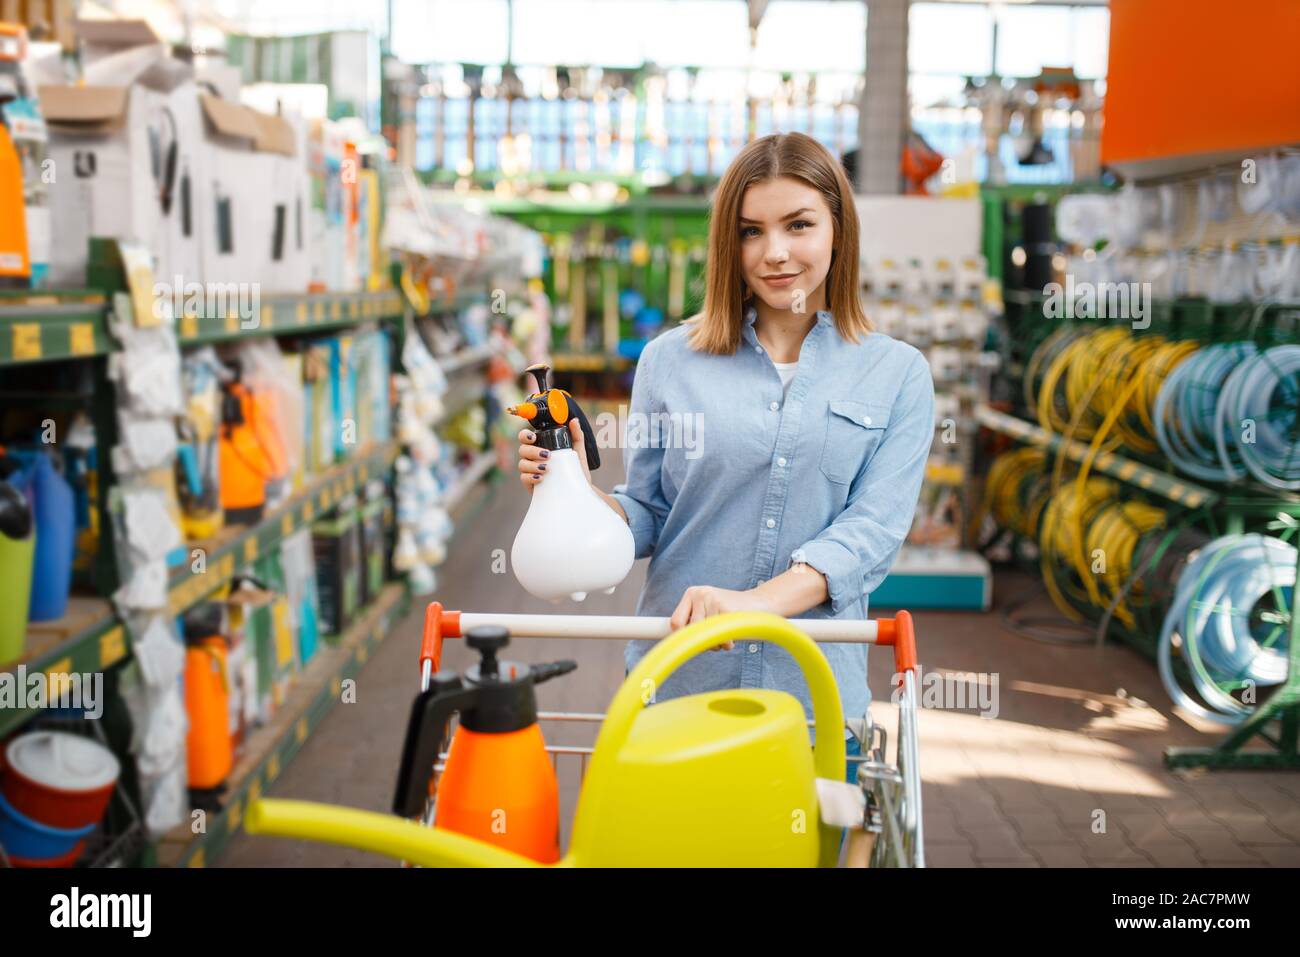 Female customer choosing tools, shop for gardeners Stock Photo